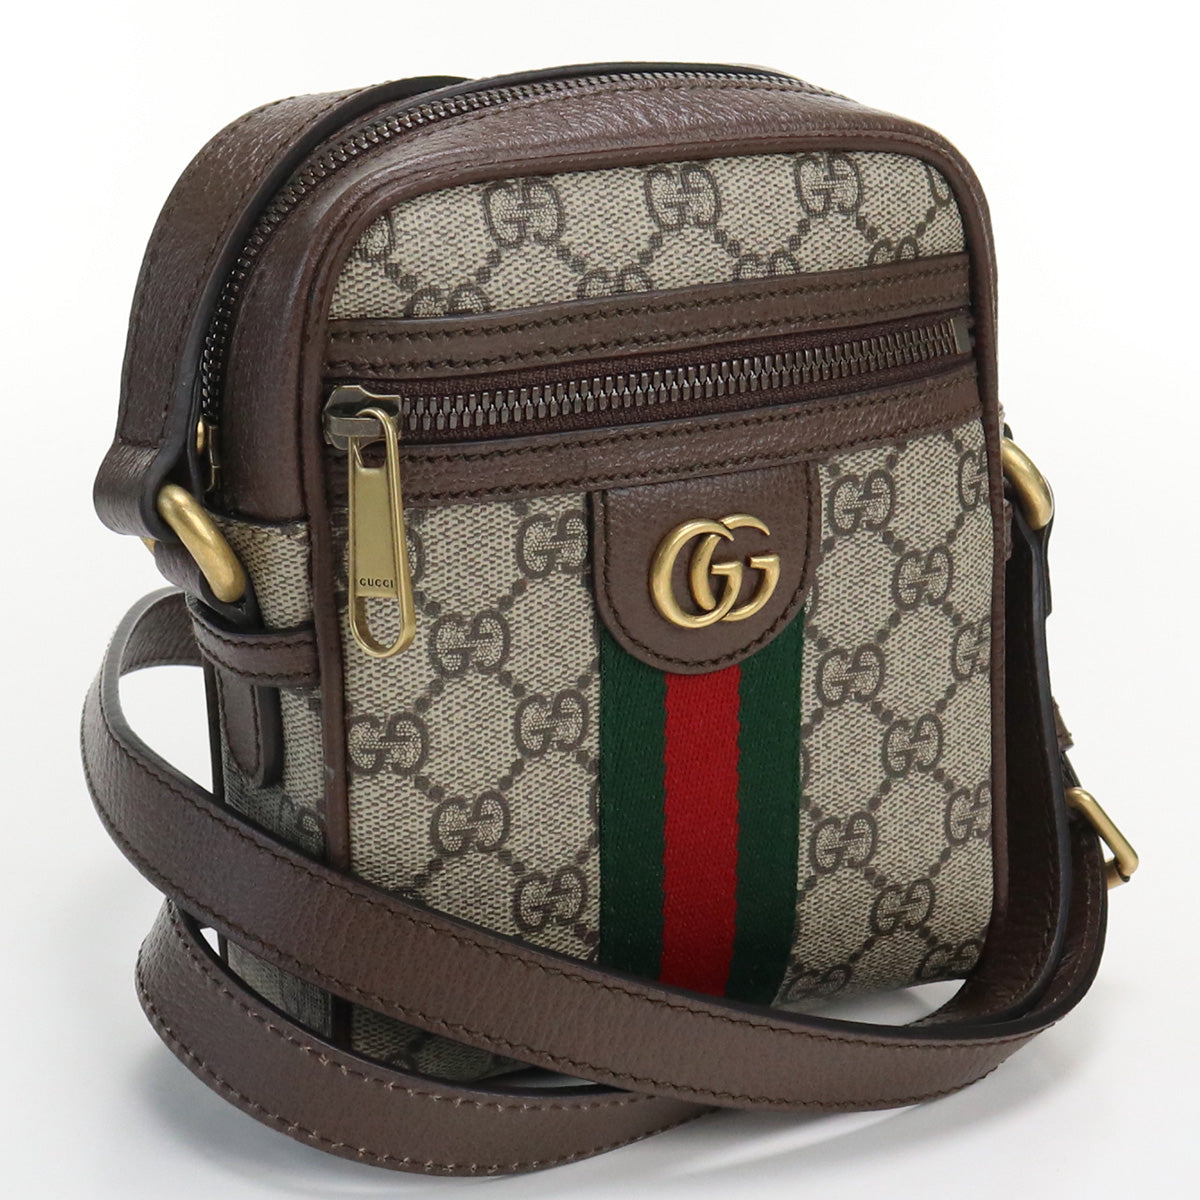 GUCCI – Japan second hand luxury bags online supplier Arigatou